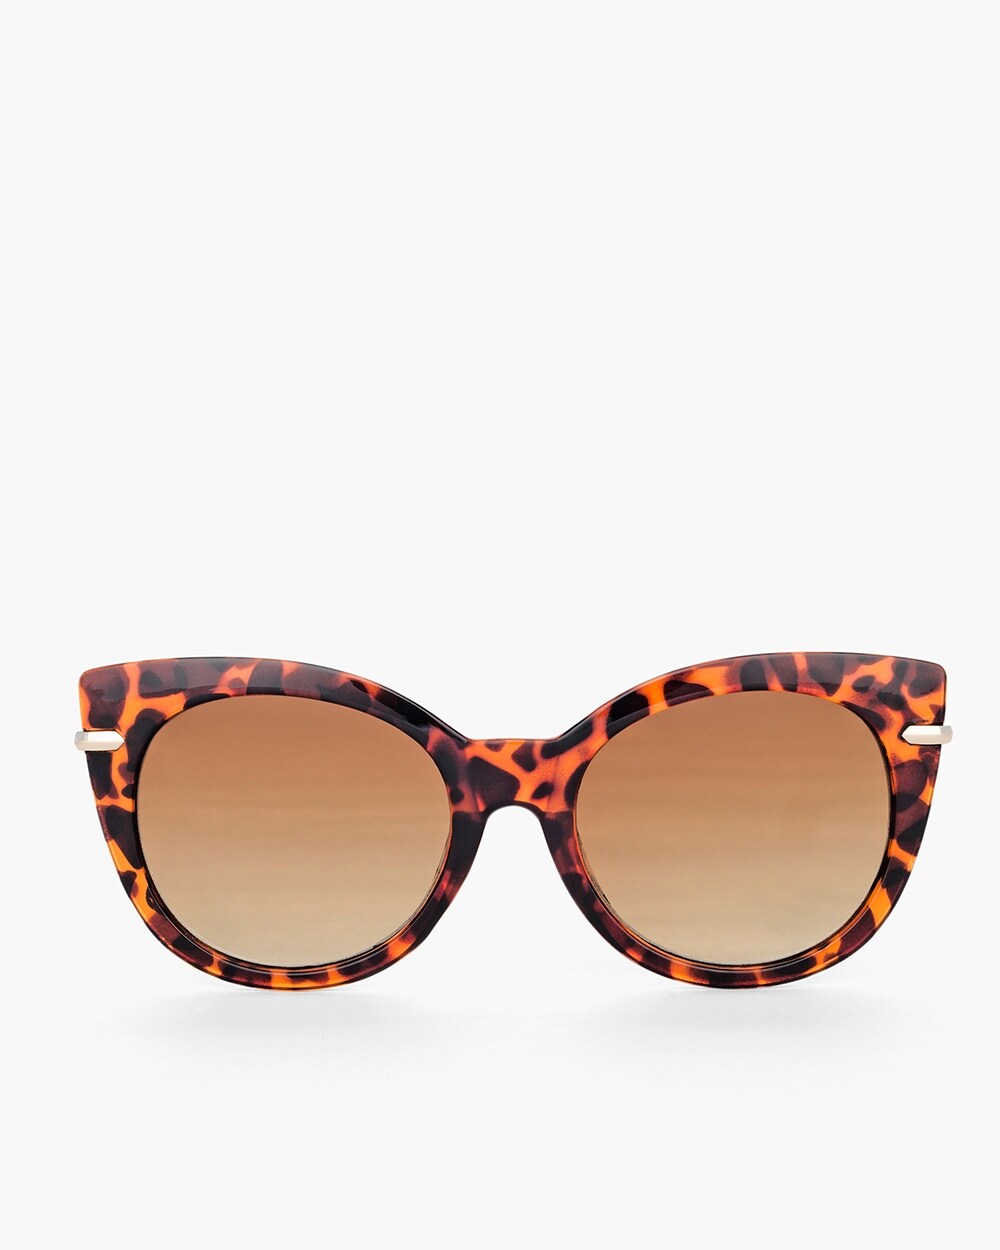 Glam Tortoiseshell Sunglasses